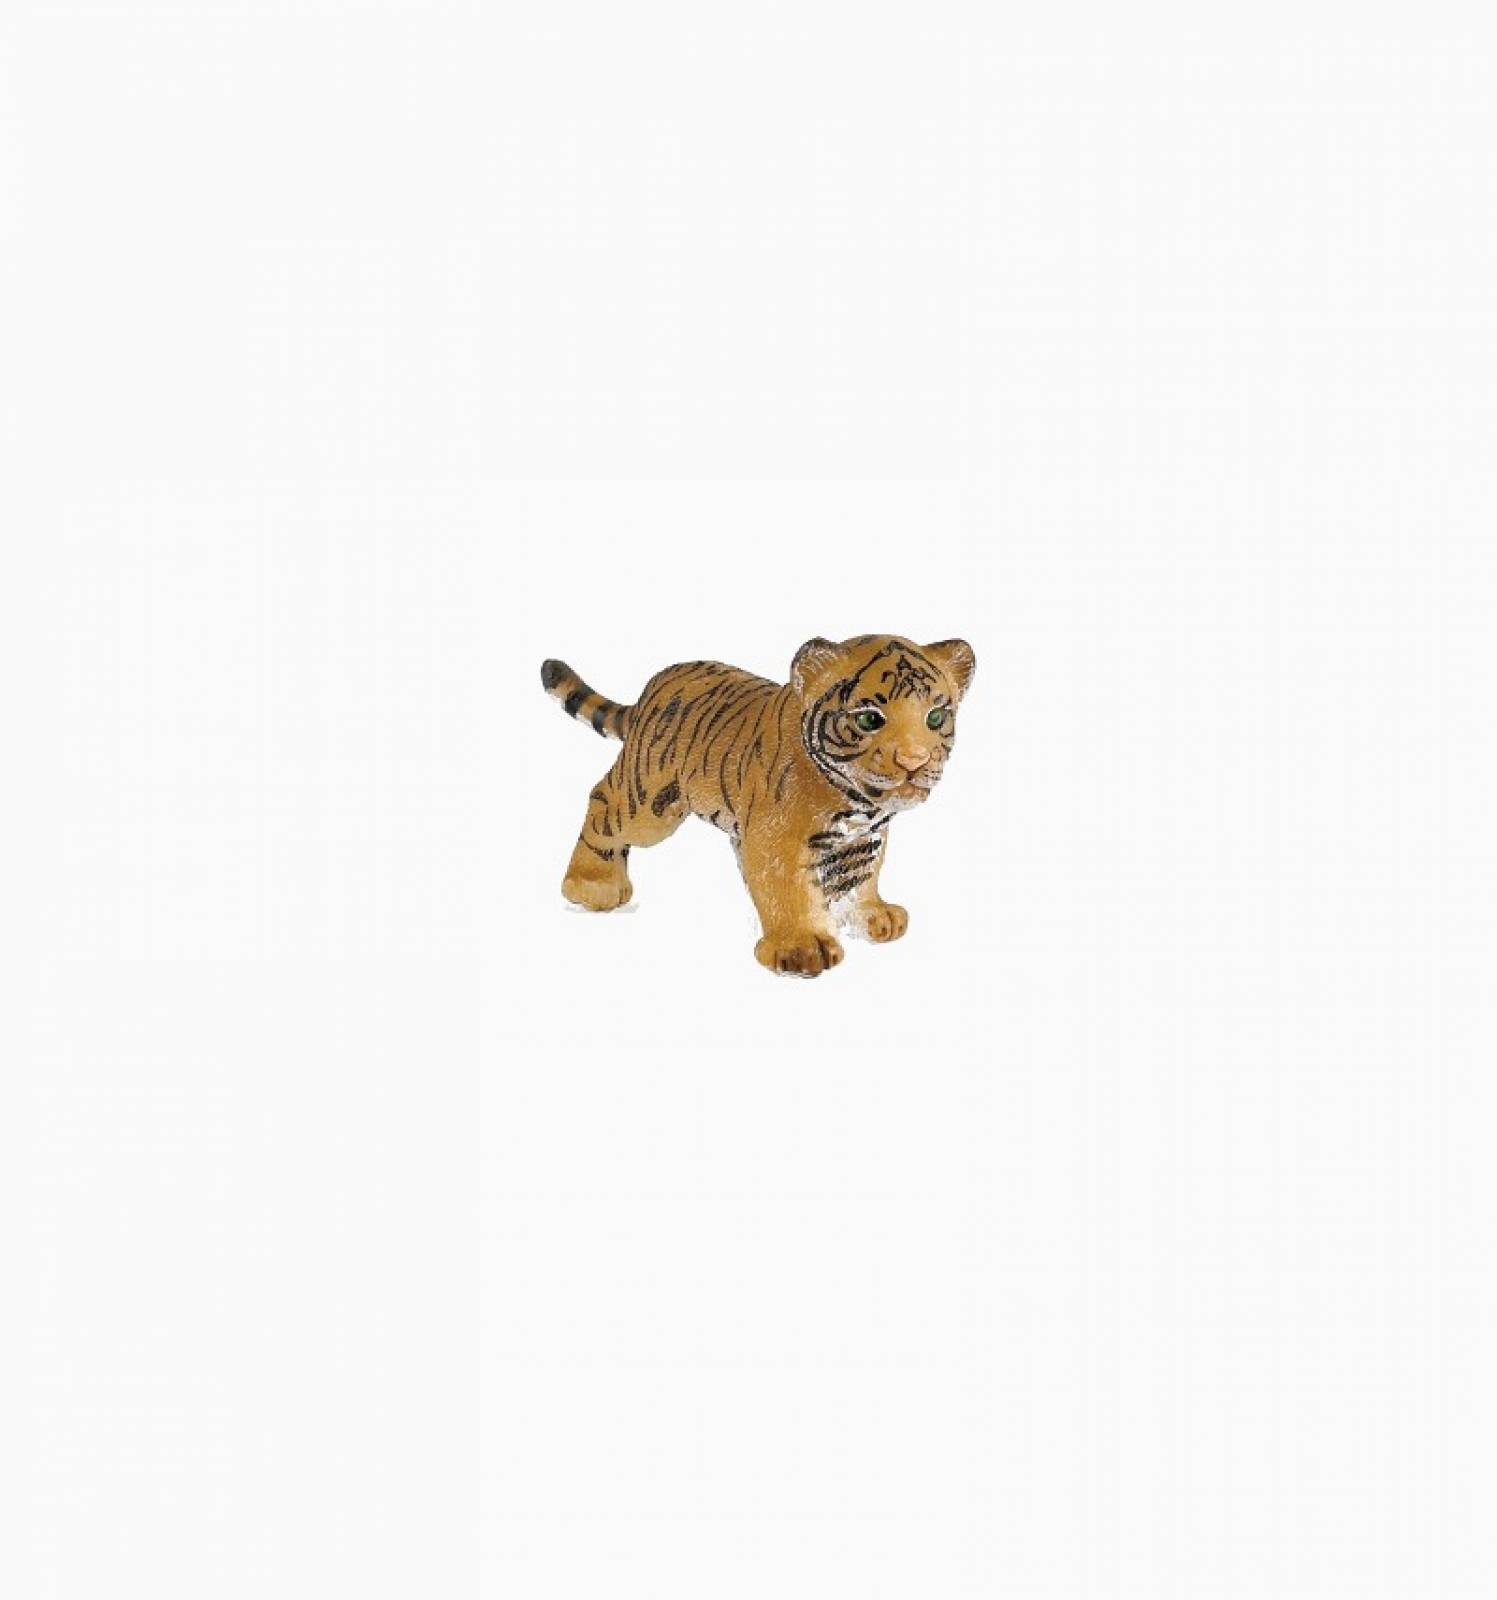 Tiger Cub - Papo Wild Animal Figure